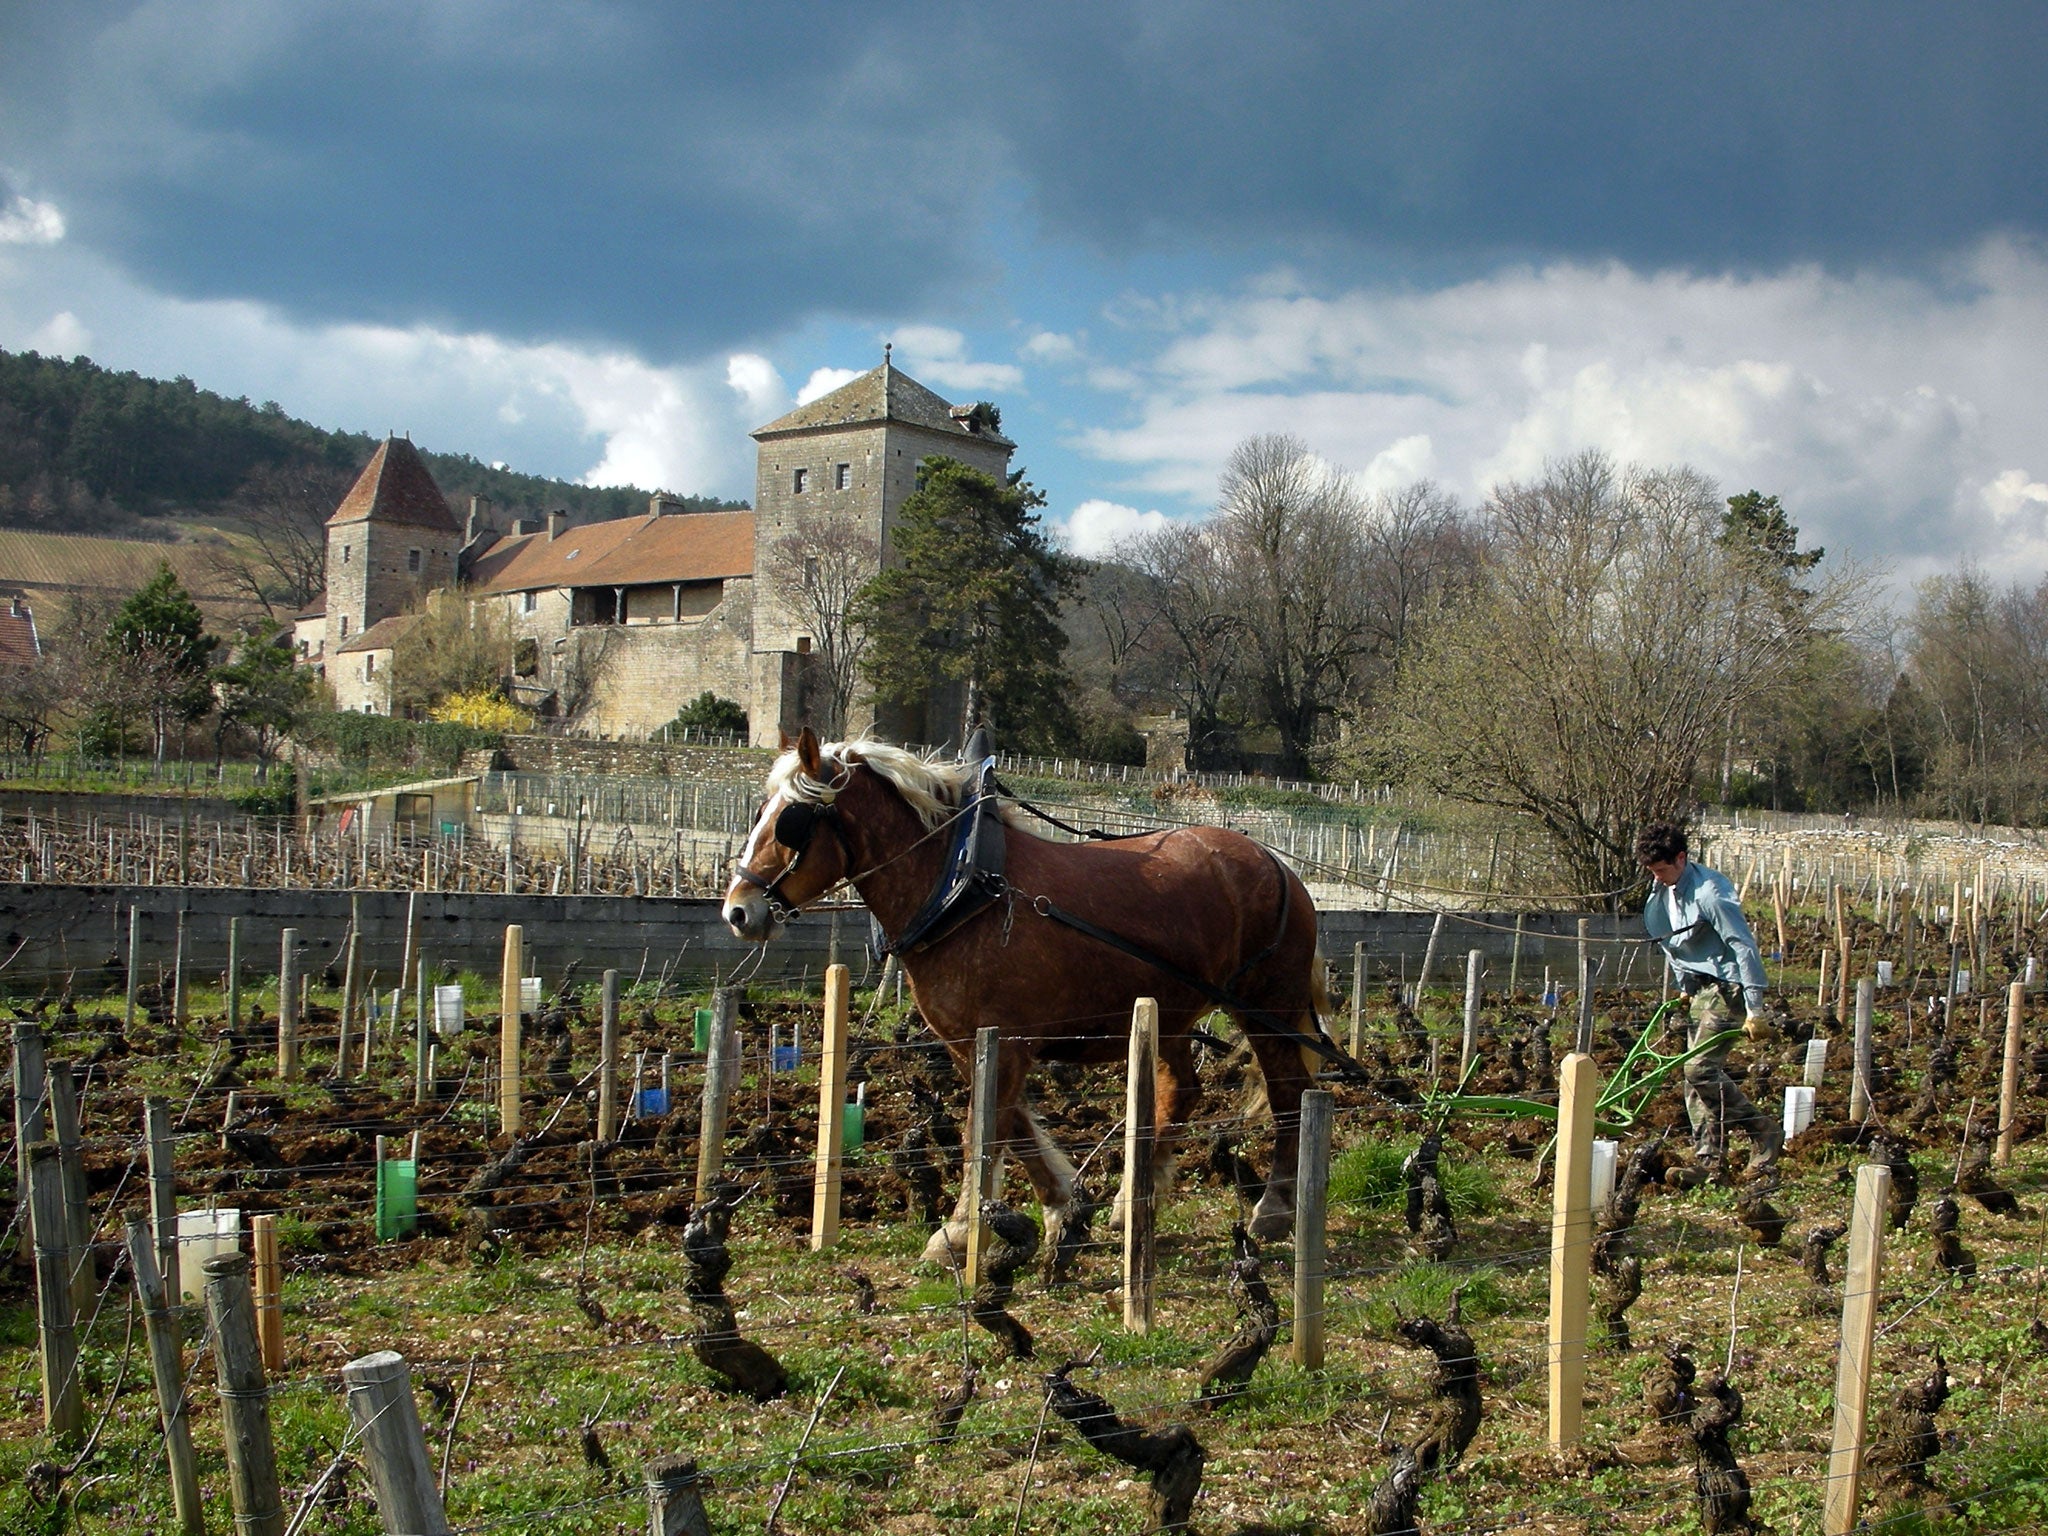 A farmer works the field in the Domaine du Château de Gevrey-Chambertin vineyard in Burgundy